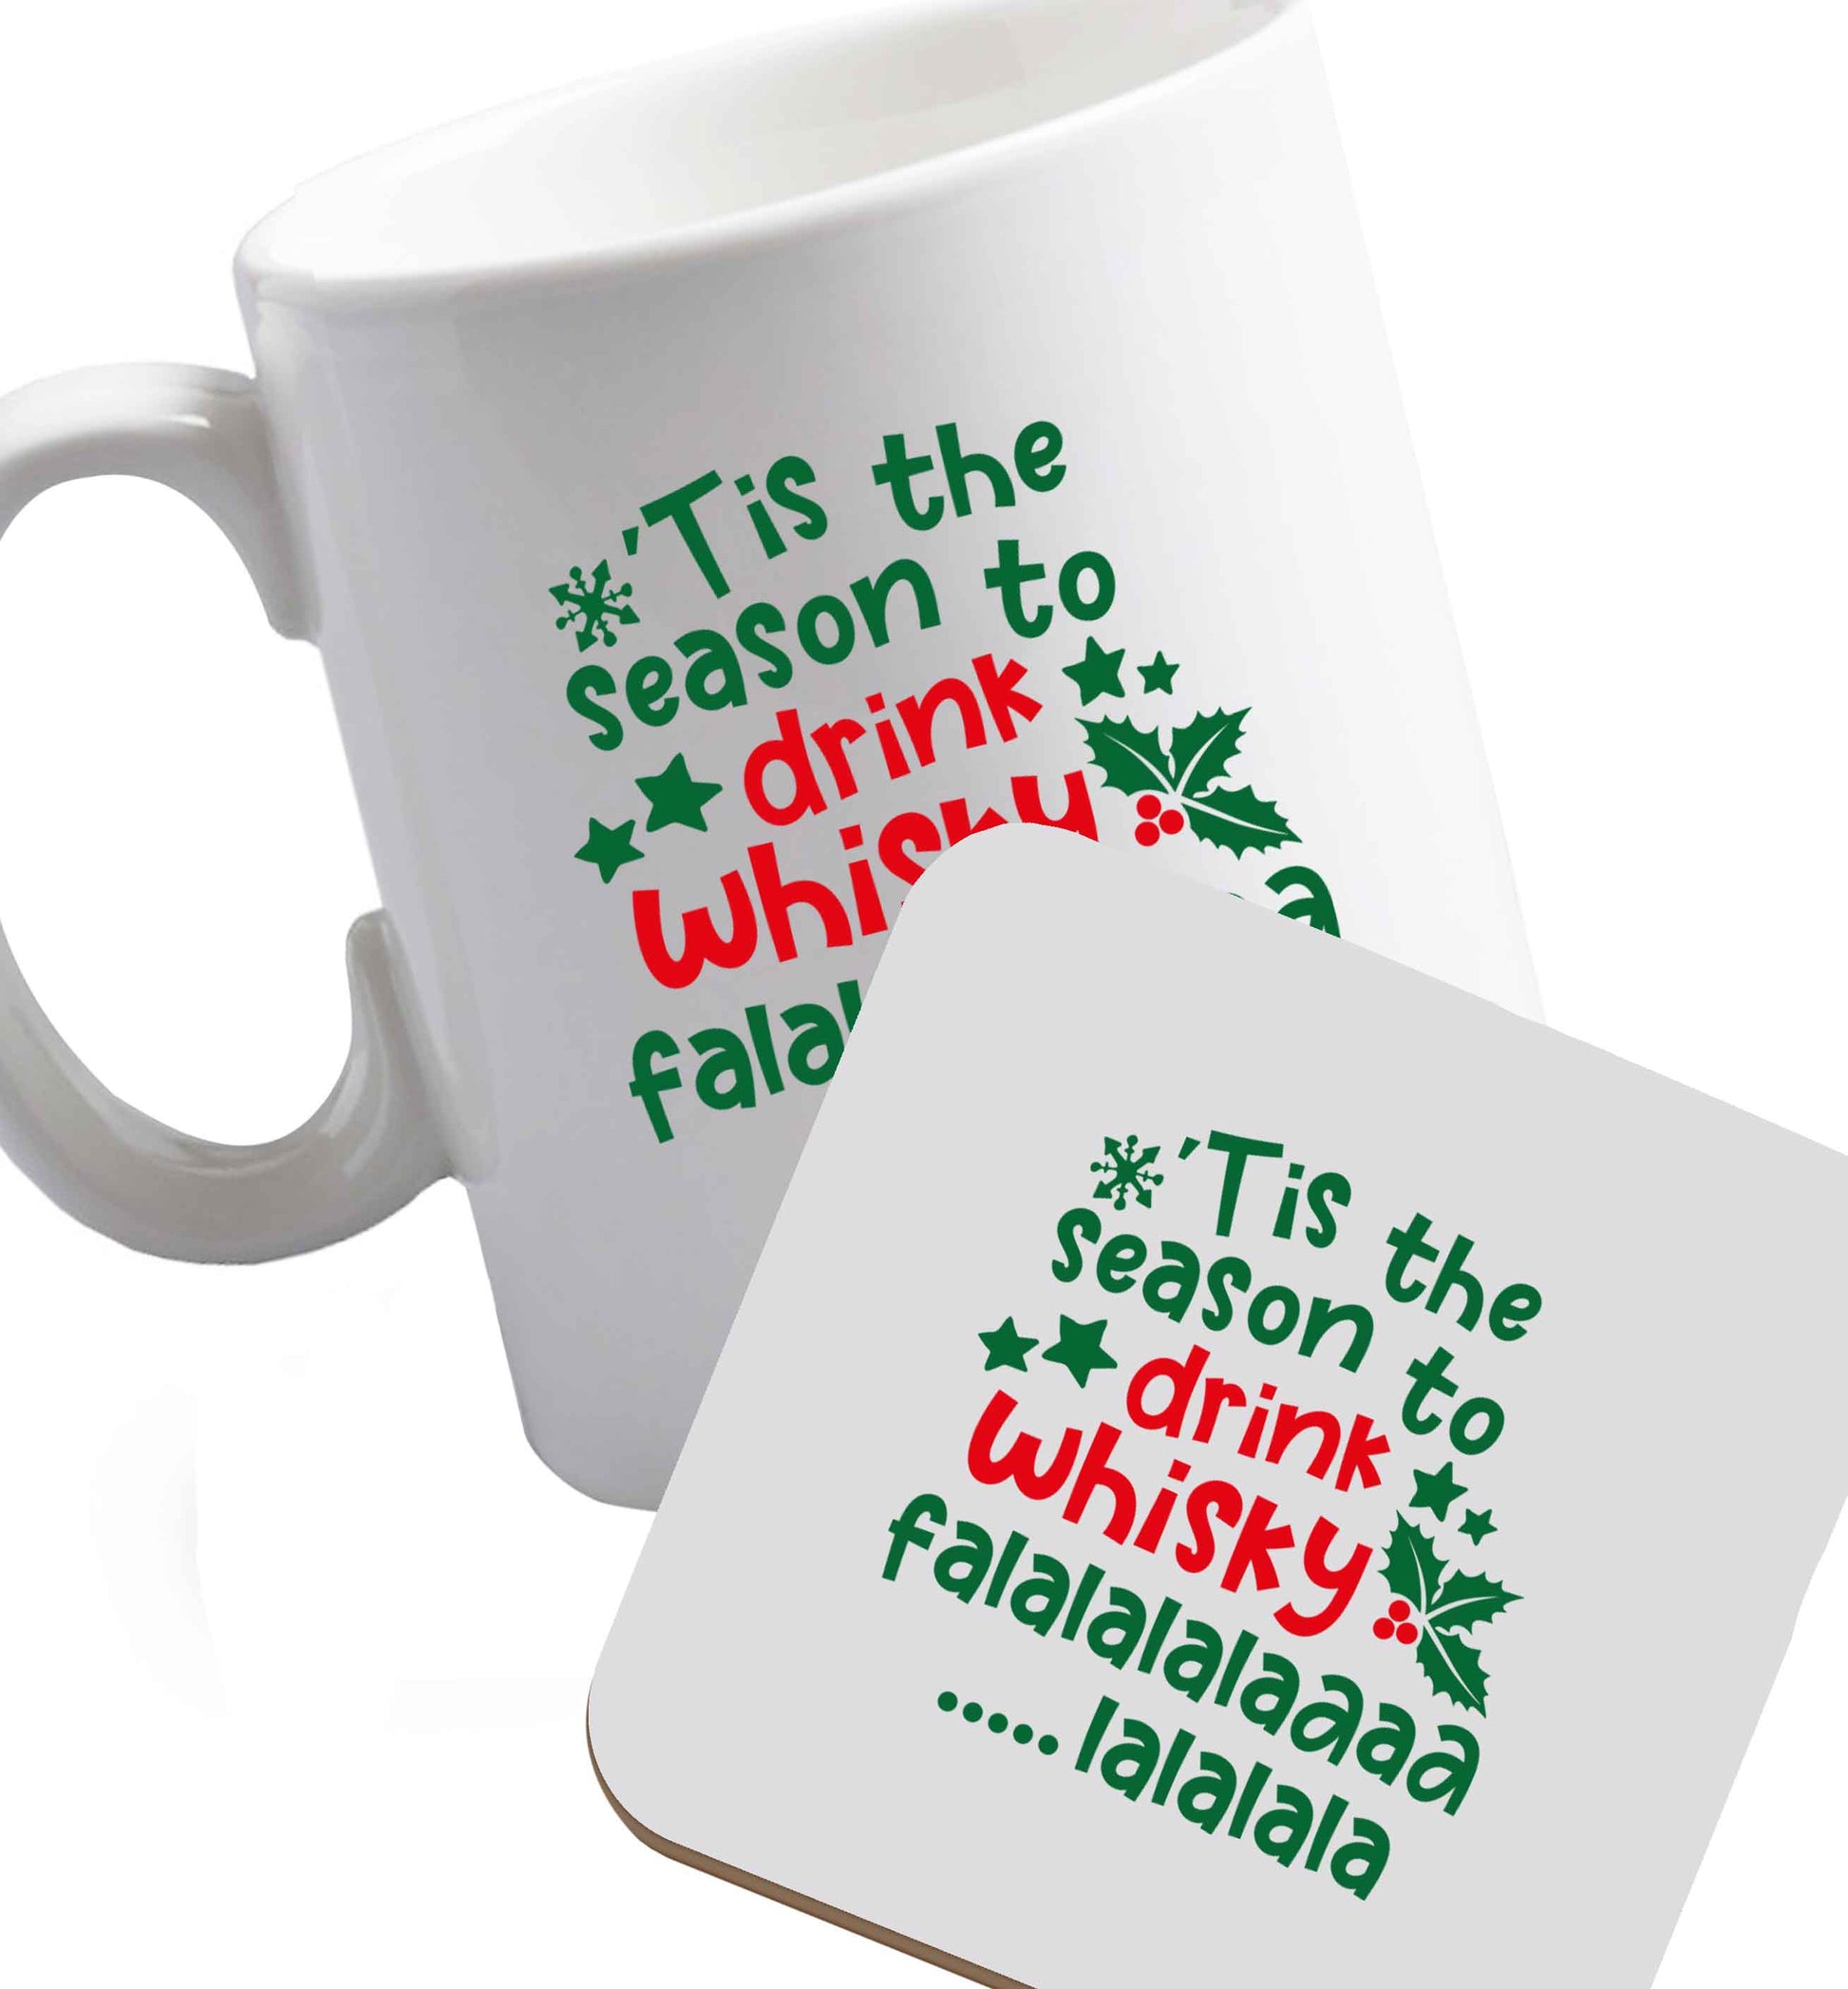 10 oz Tis The Season to Drink Whisky ceramic mug and coaster set right handed